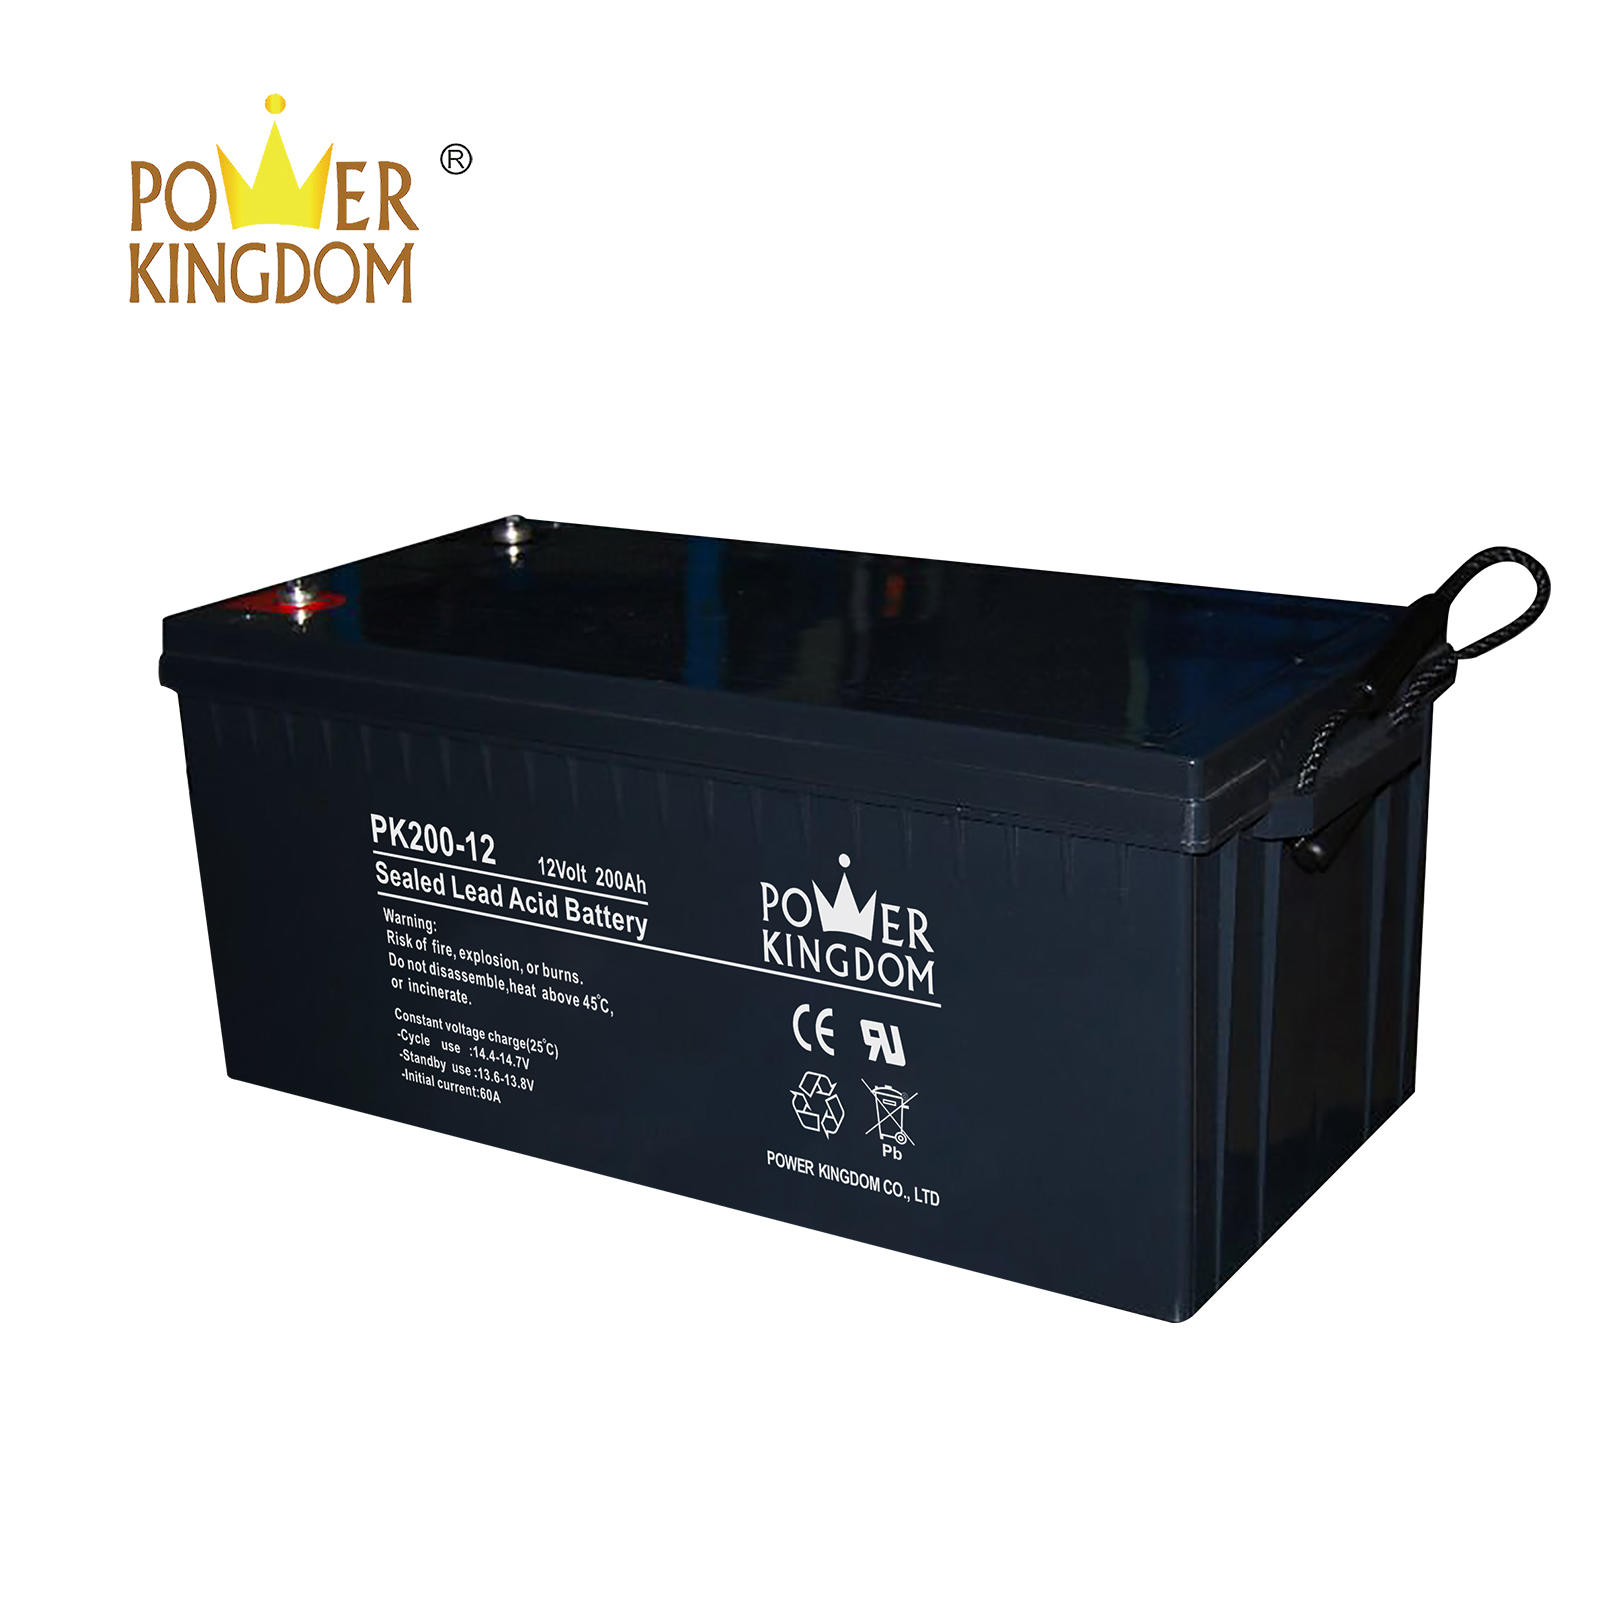 Power Kingdom advanced glass mat battery Suppliers Power tools